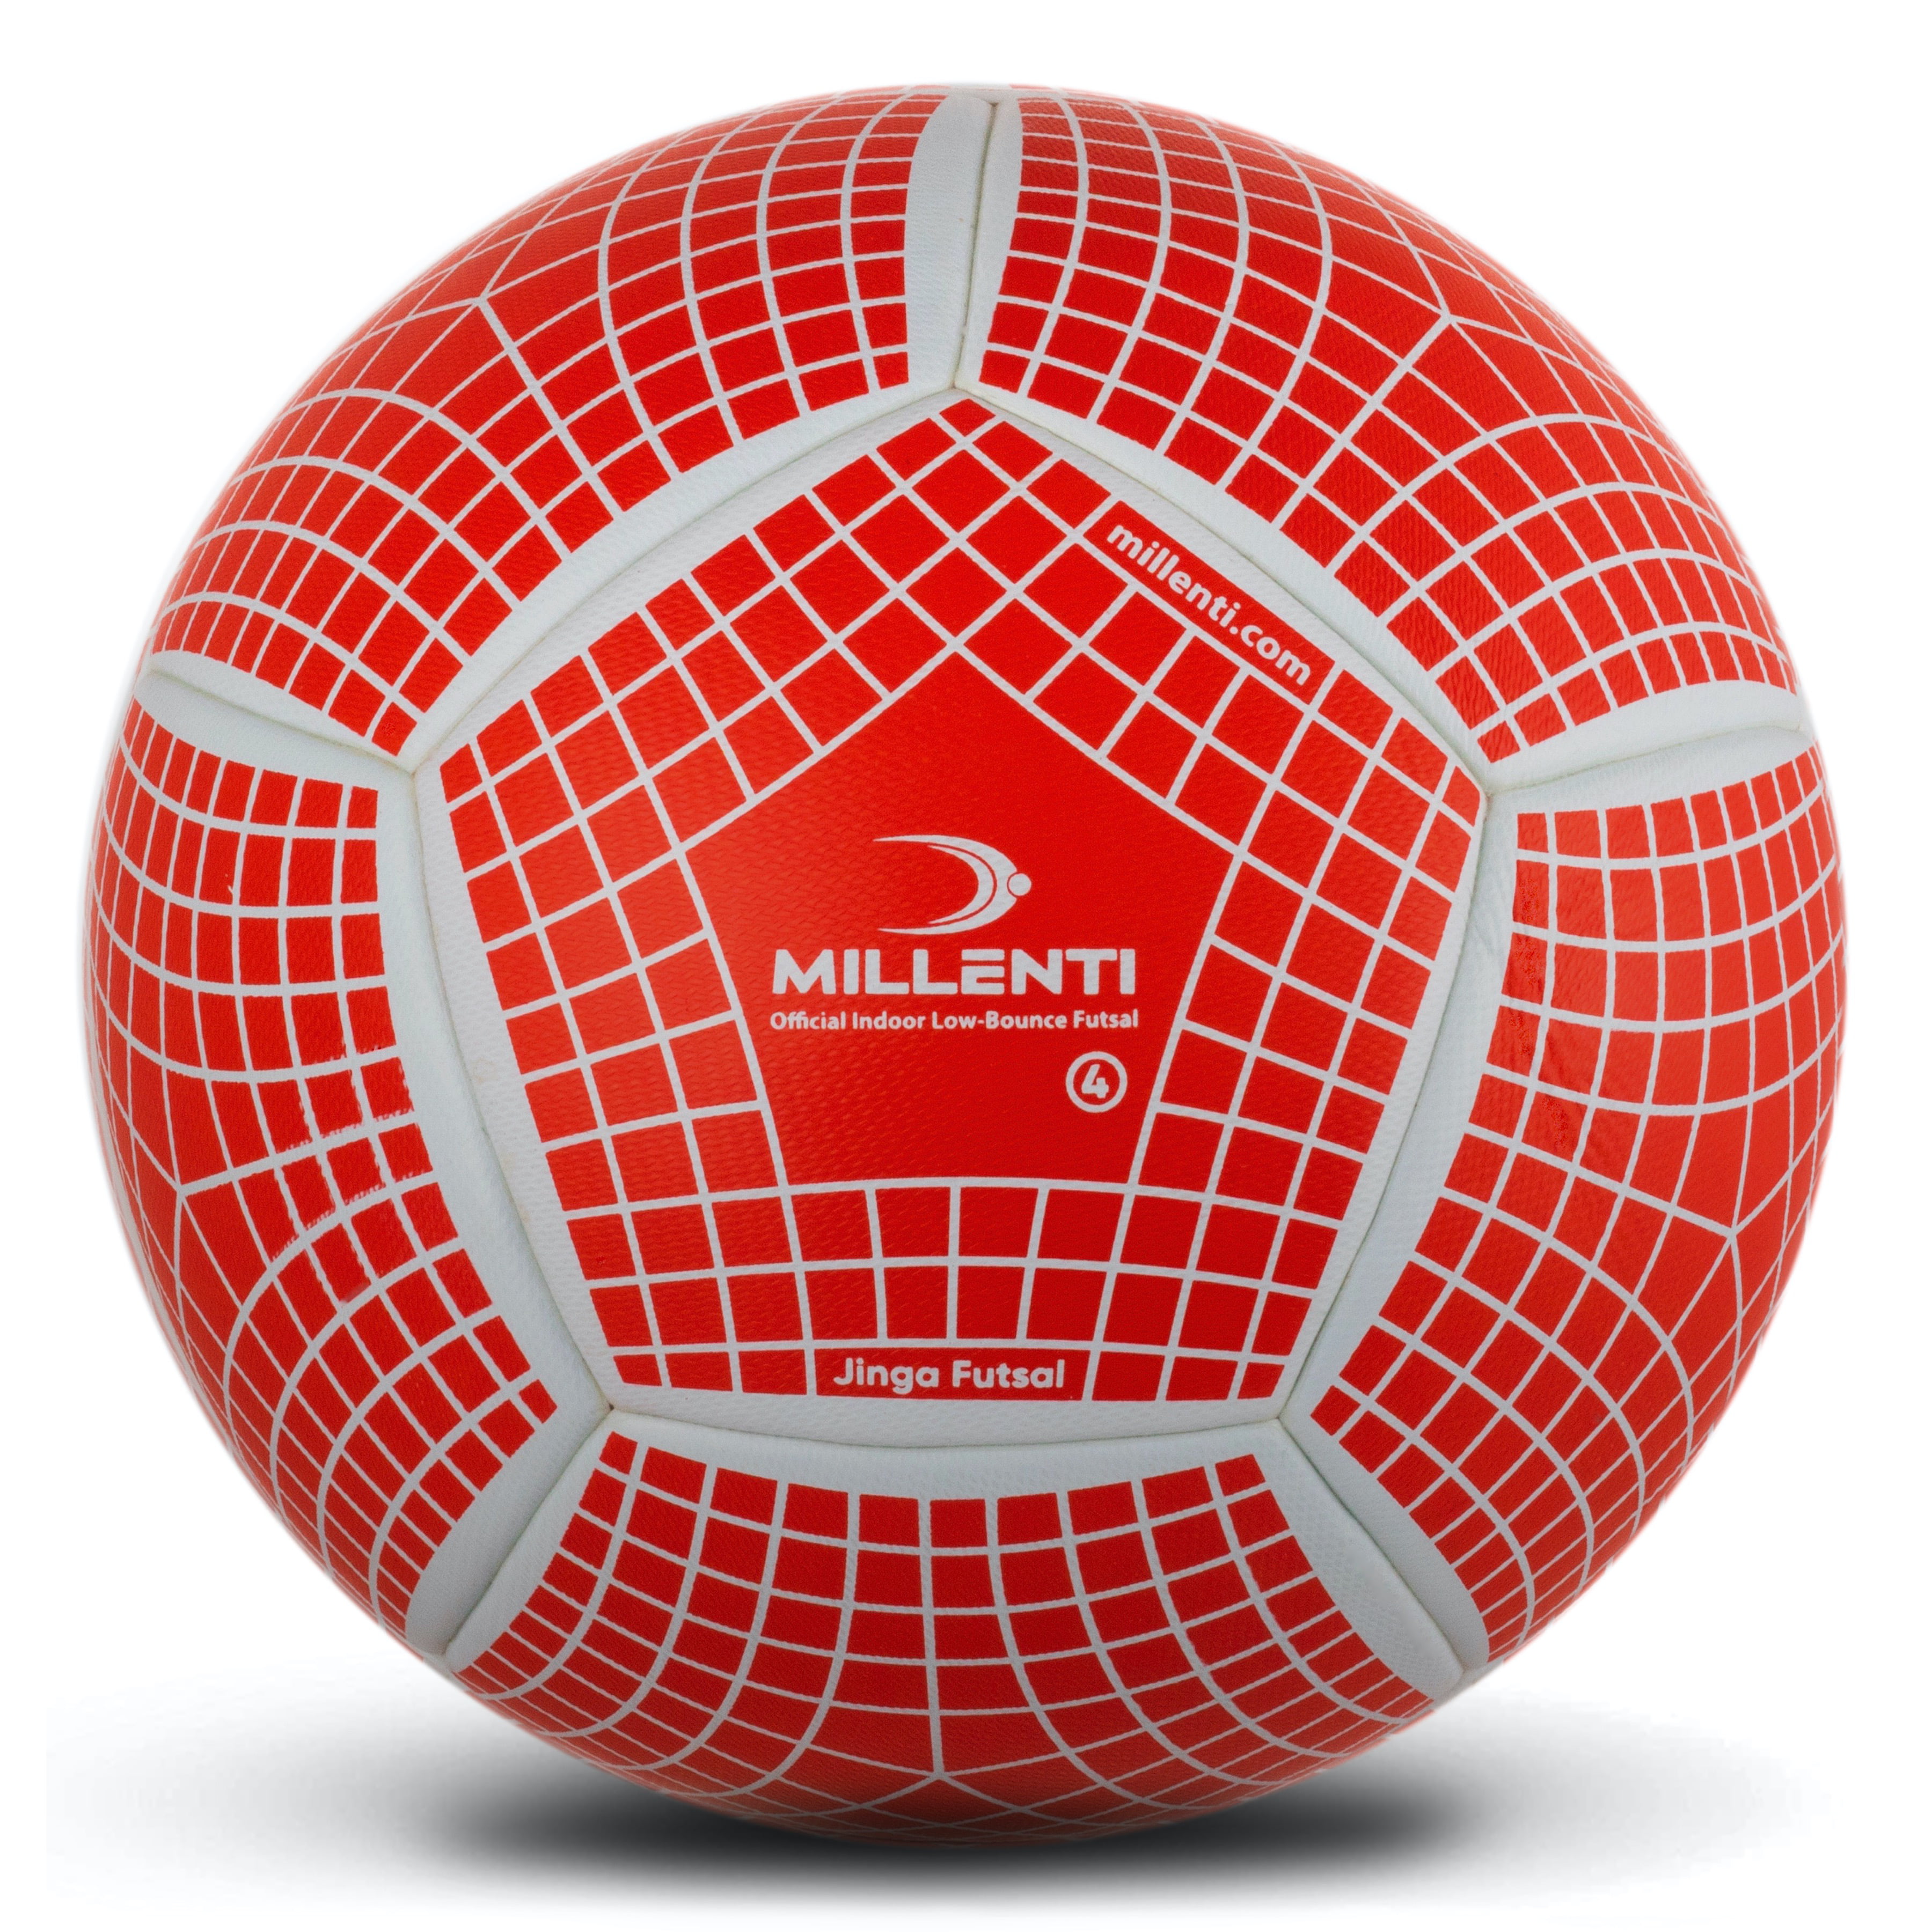 Titano Estrella junior size Futsal 7-Star Futsal Official Match Ball Red